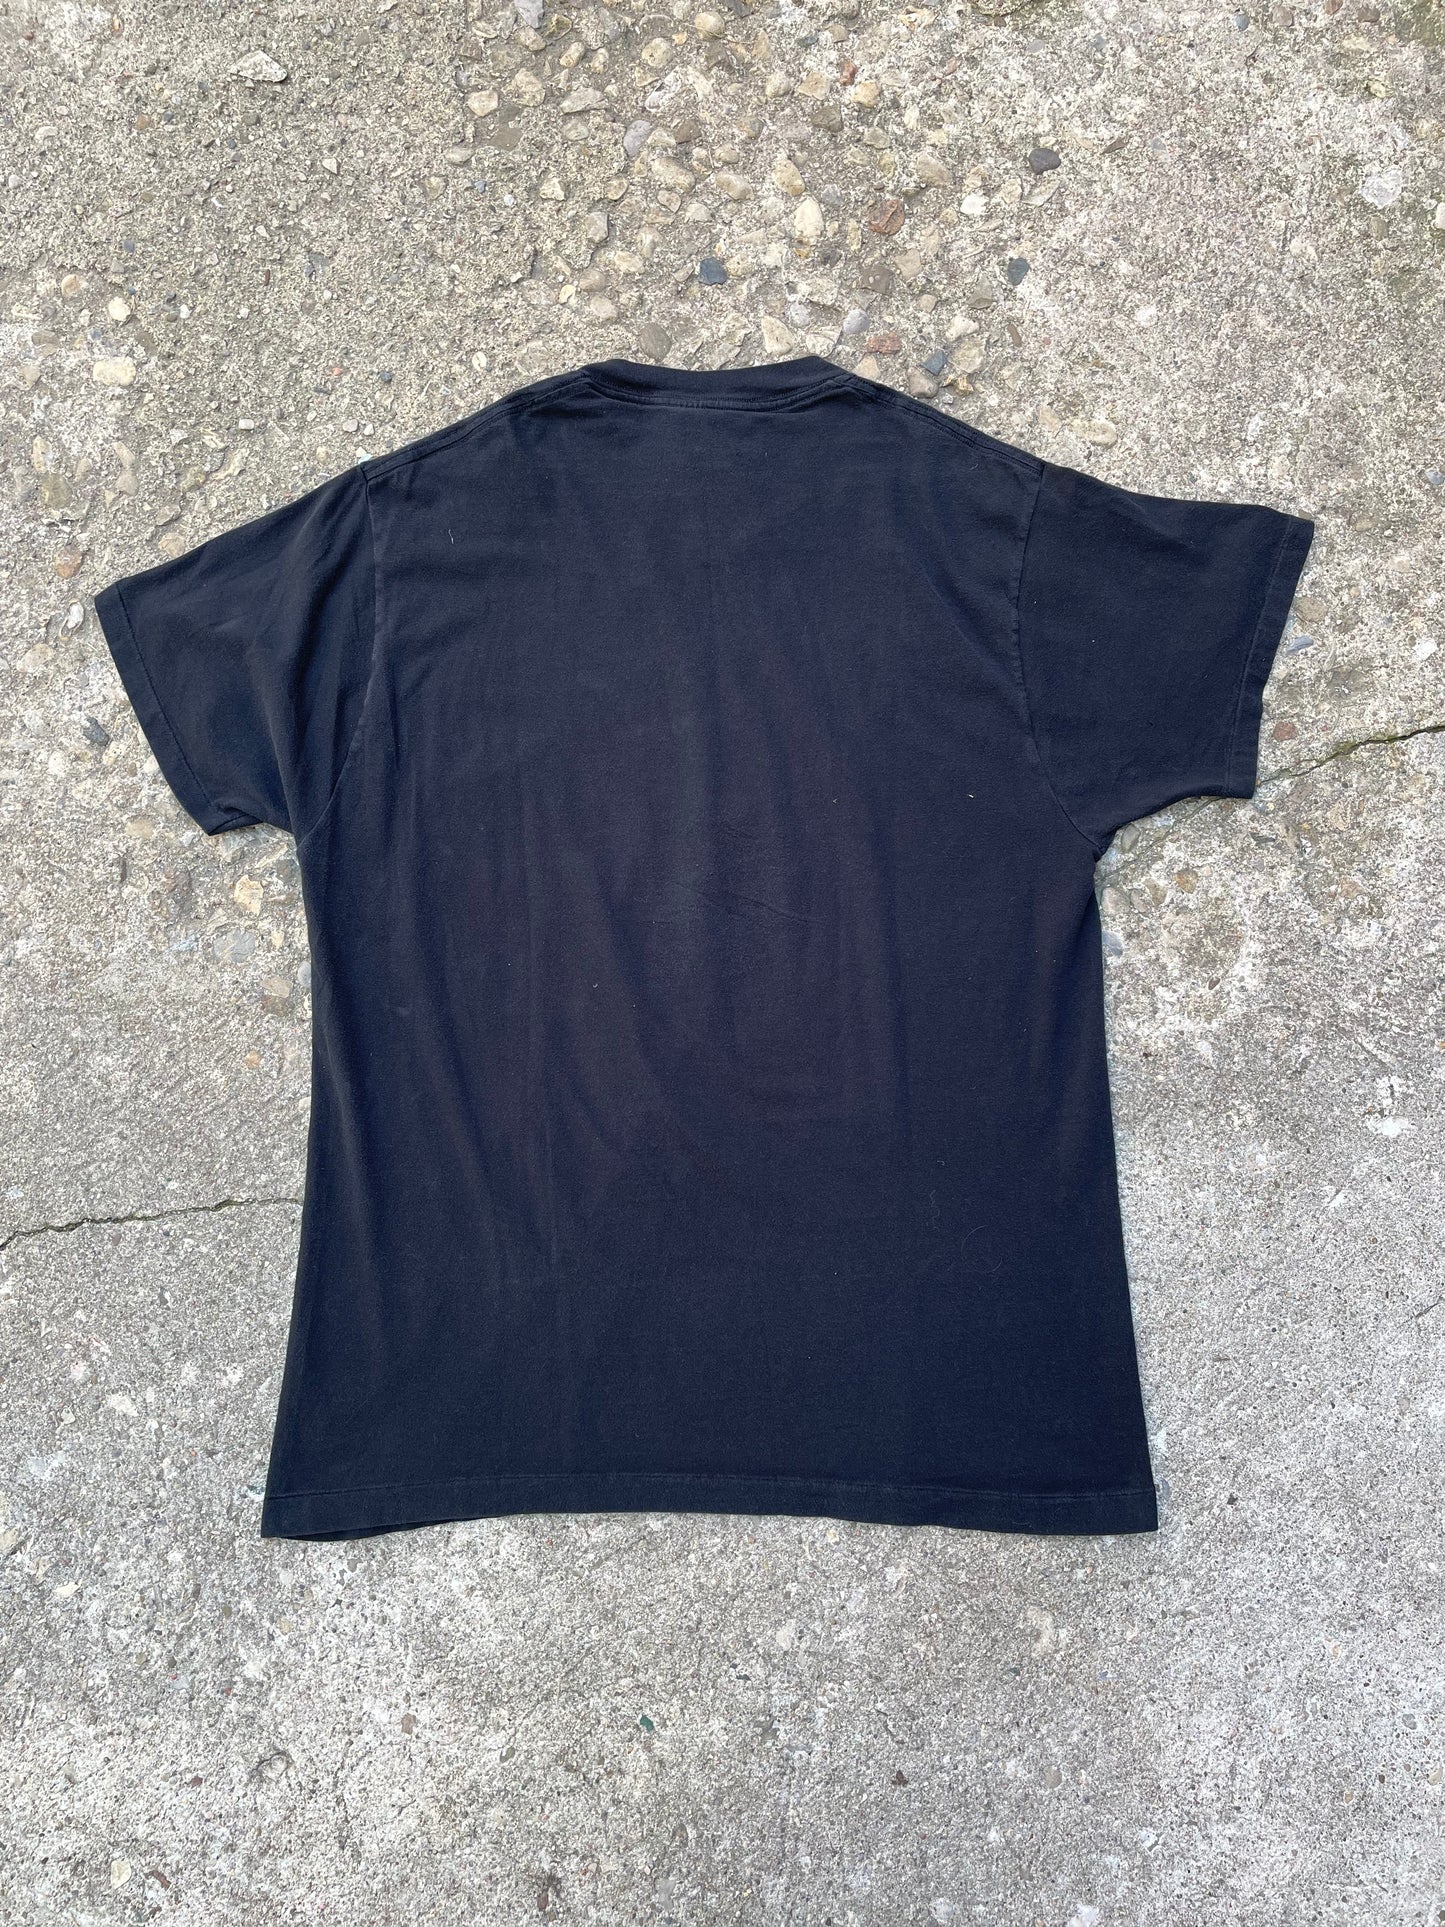 Zach Gucci Razal x Thrift Piff Airbrush 'Star' T-Shirt - XL